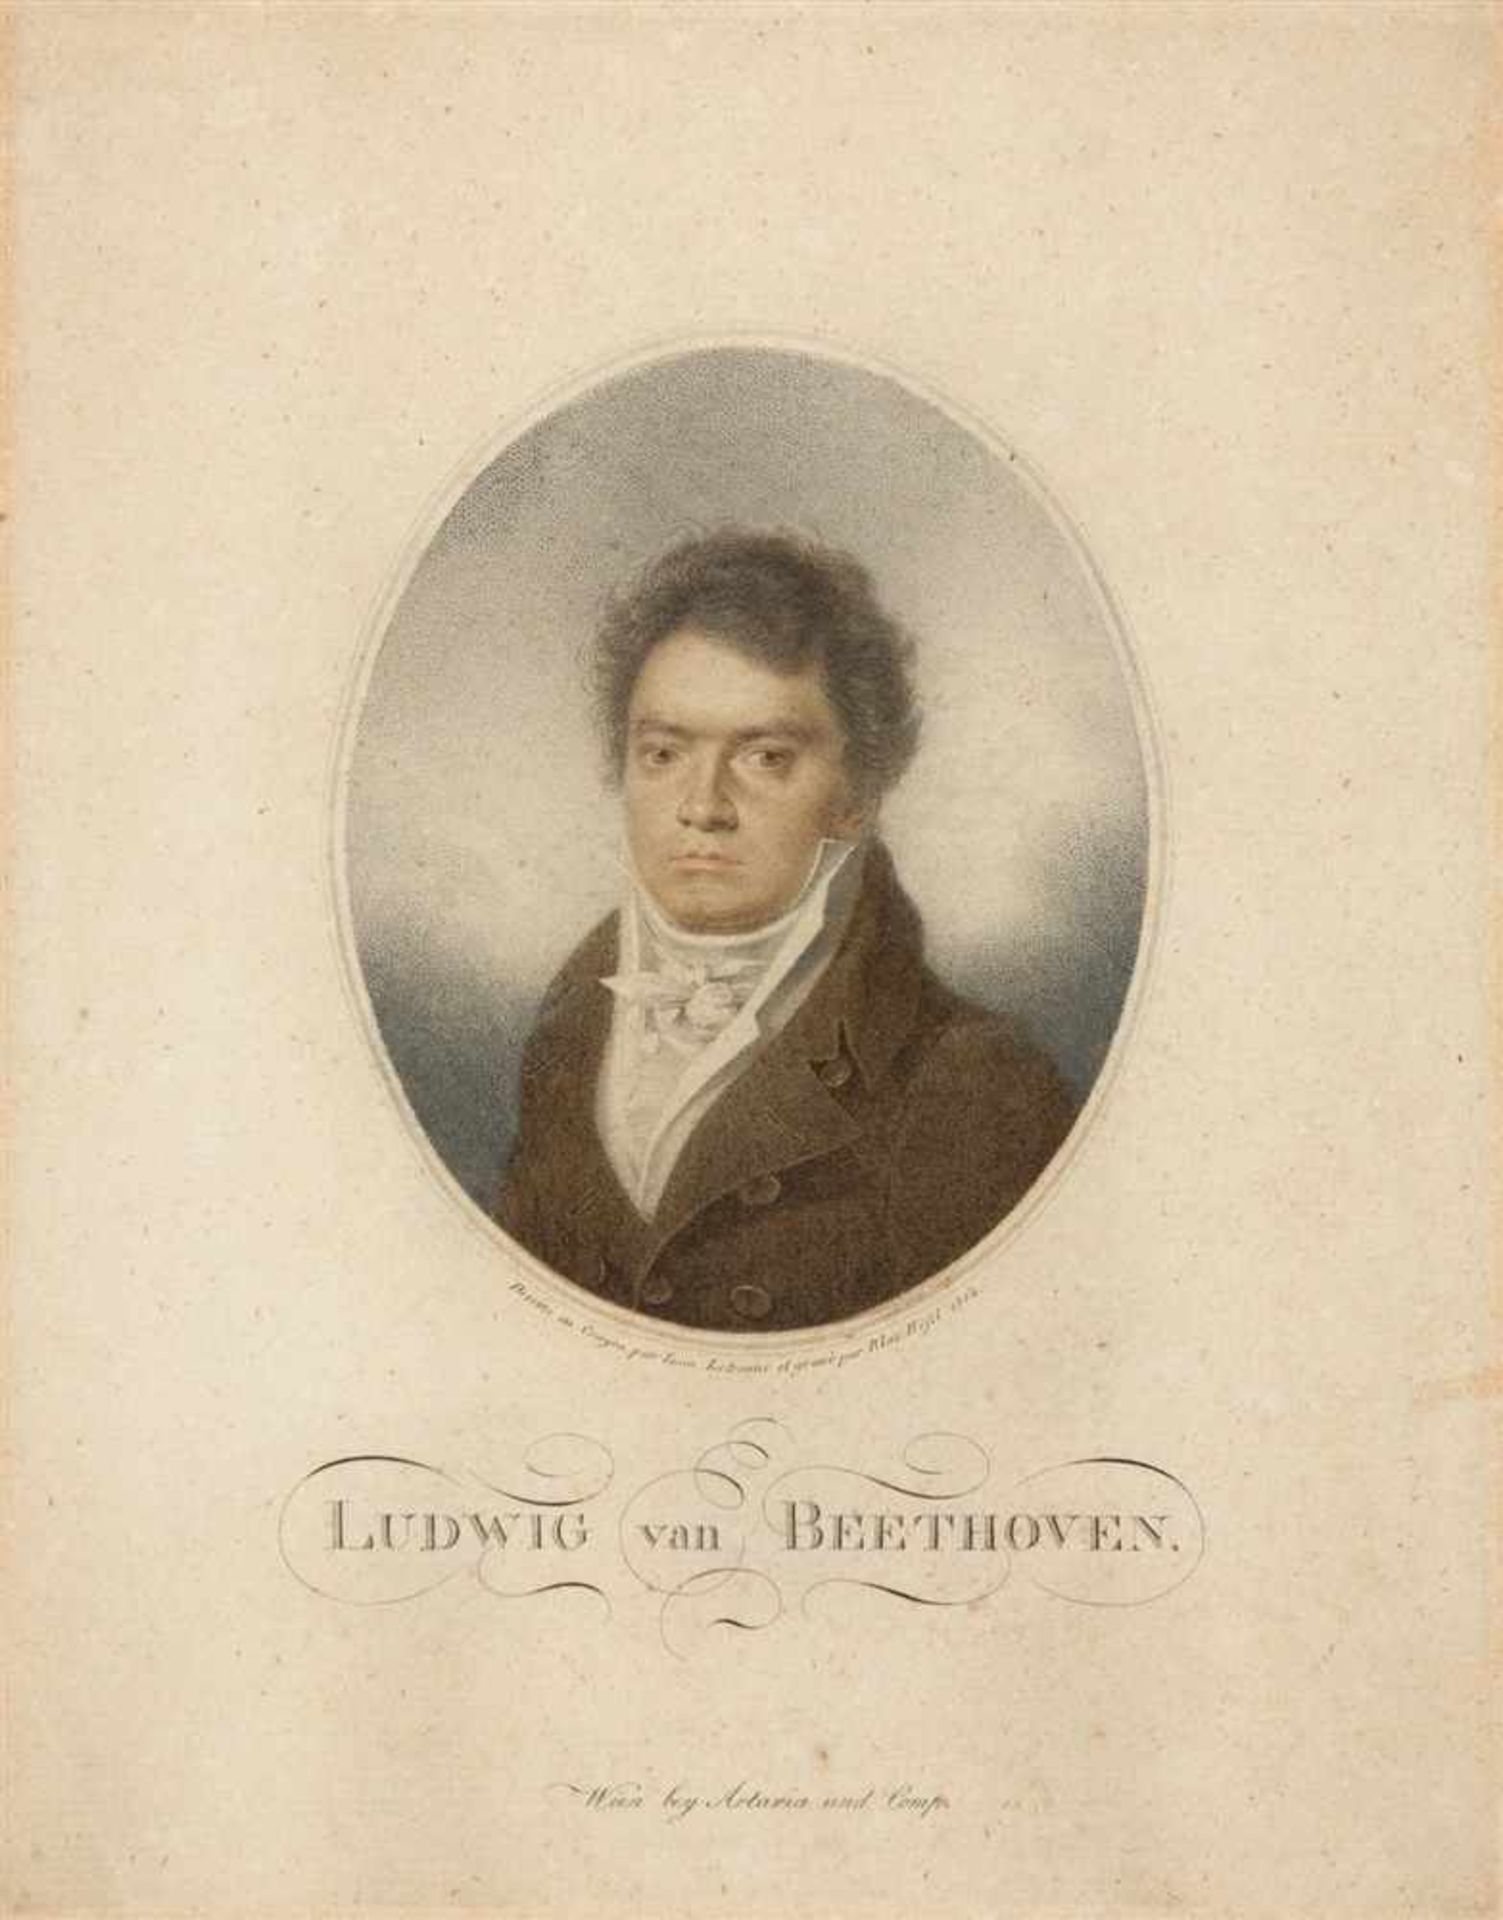 Porträts. - Ludwig van Beethoven (Bonn 1770 - 1827 Wien). Brustbild im Oval, leicht nach links.